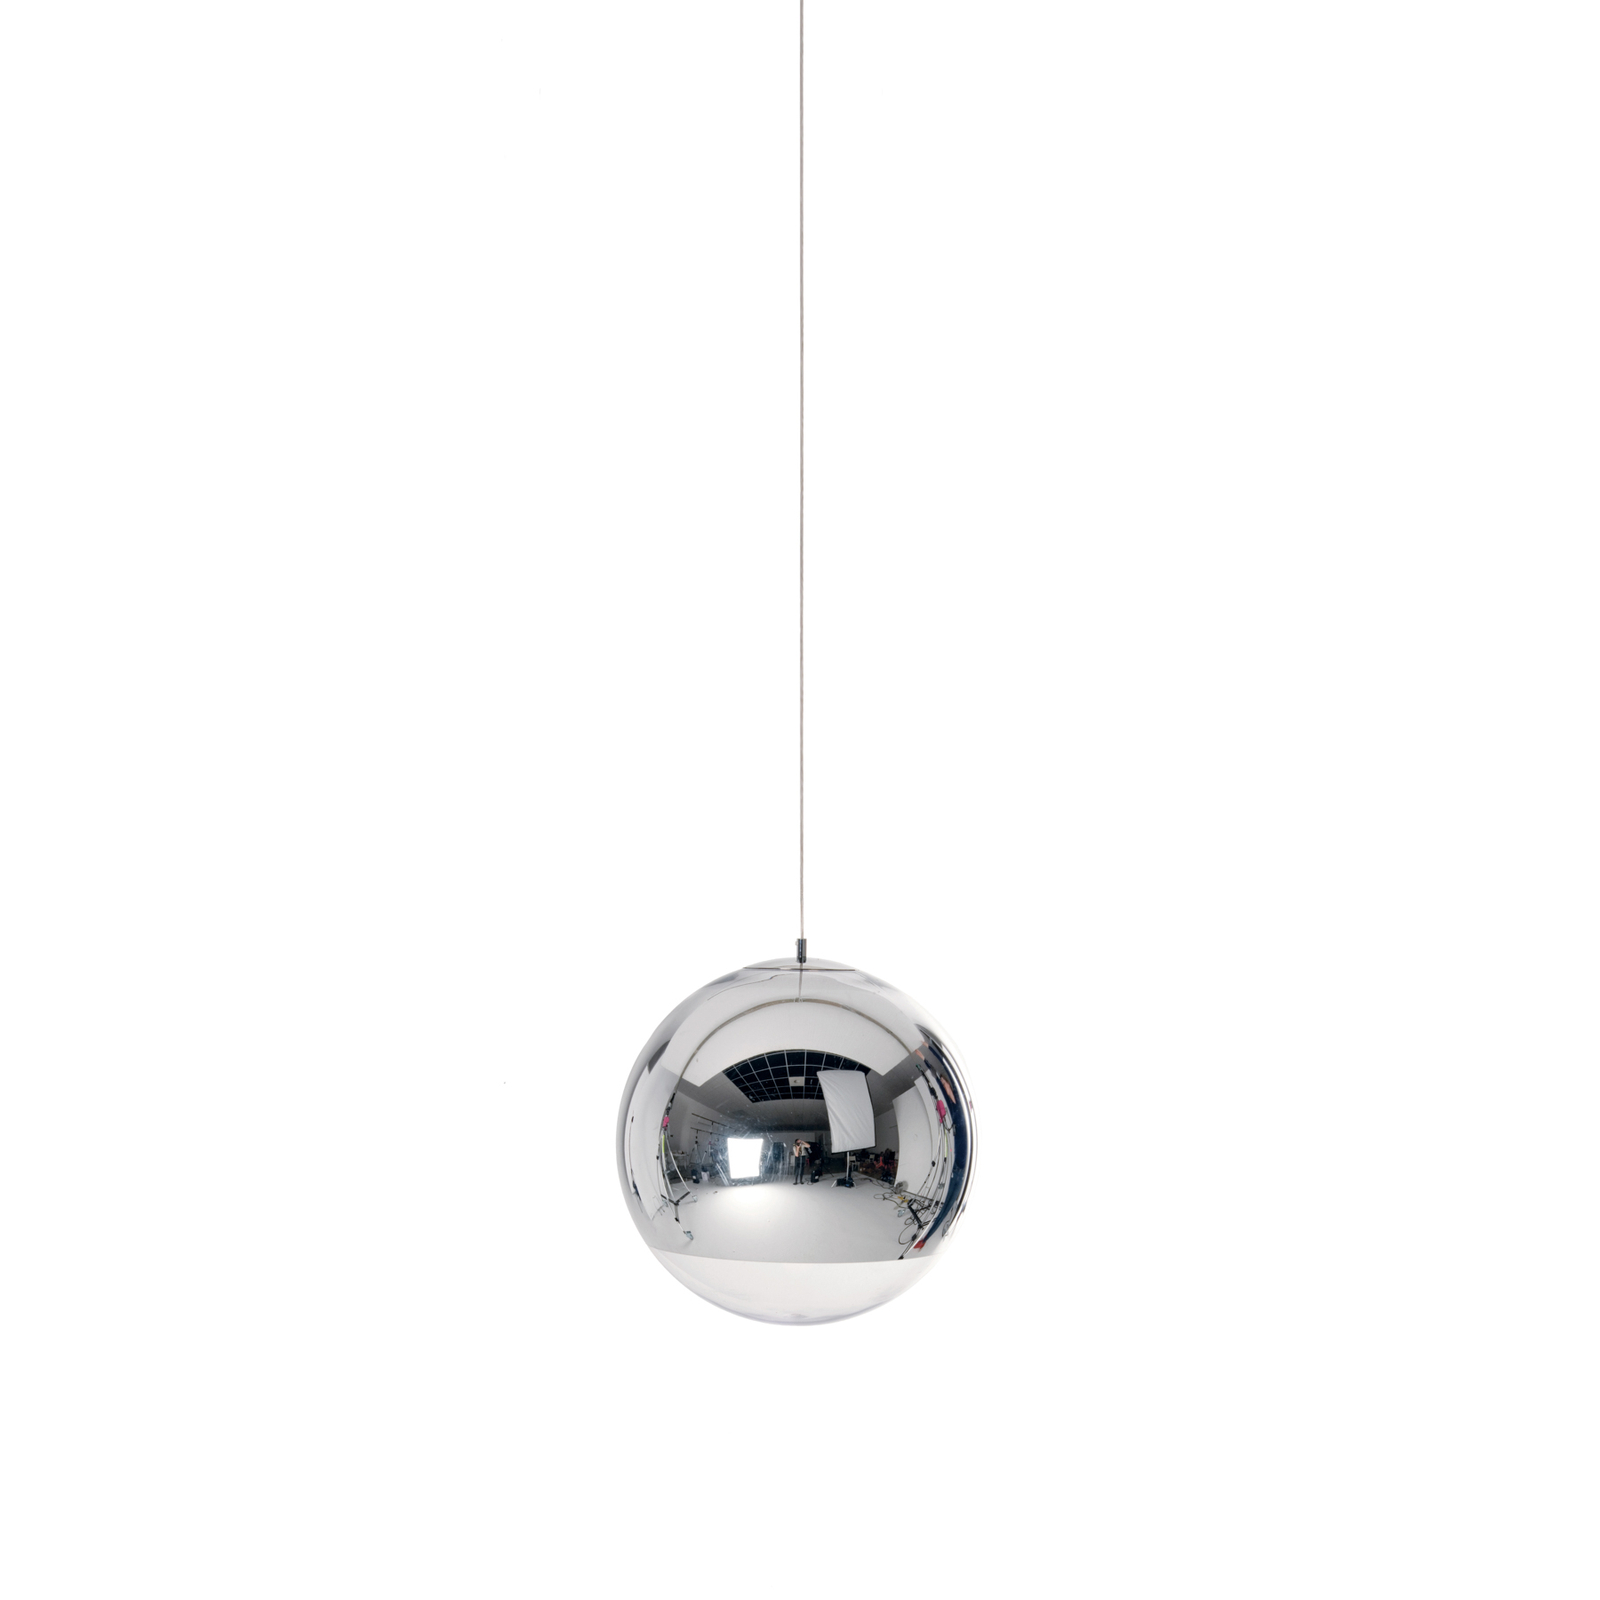 Tom Dixon Mirror Ball LED-Hängelampe Ø 50 cm chrom